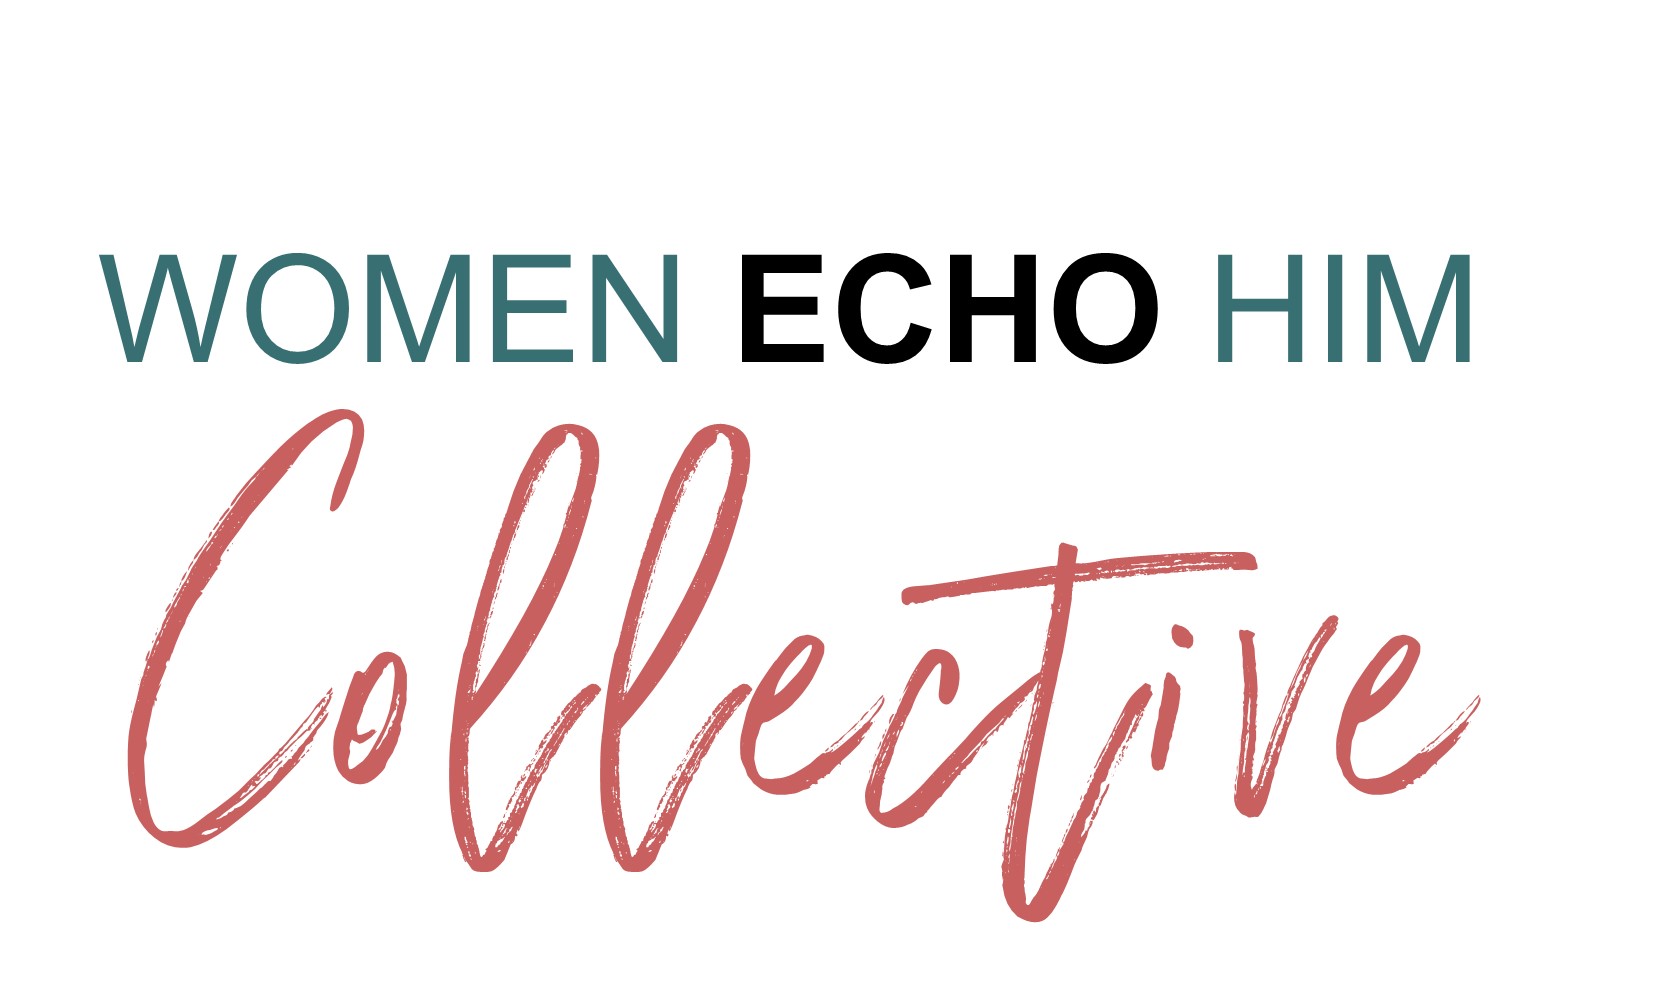 Women ECHO Him Collective 